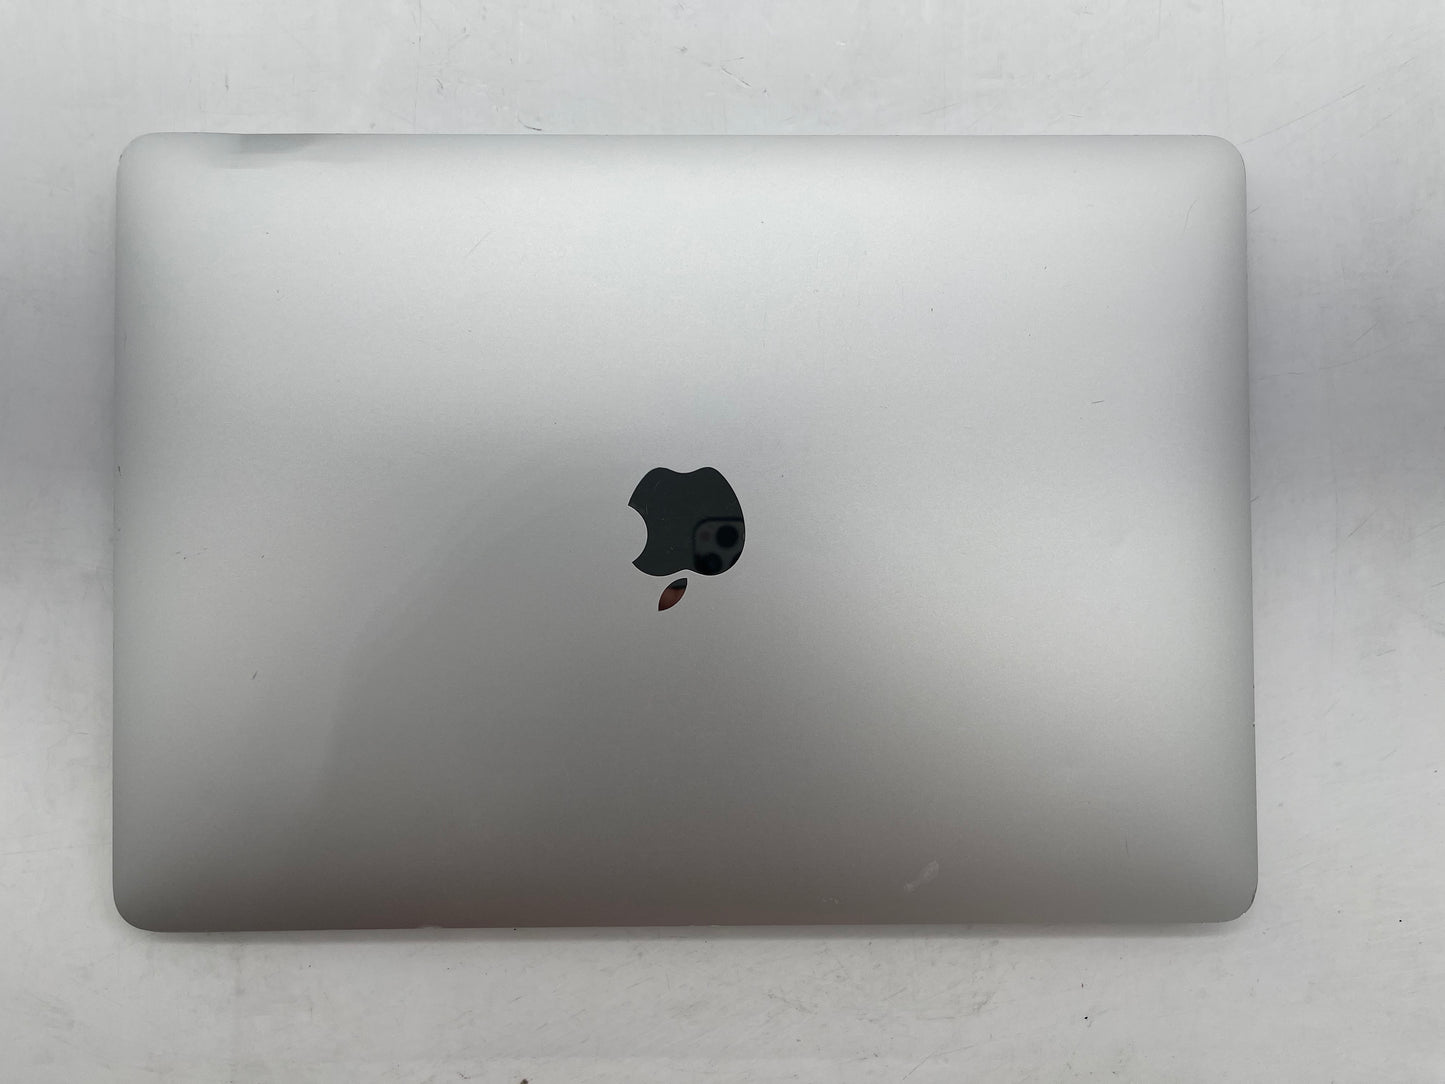 Apple 2019 MacBook Air 13 in 1.6GHz i5 8GB RAM 128GB SSD IUG 617 - Good